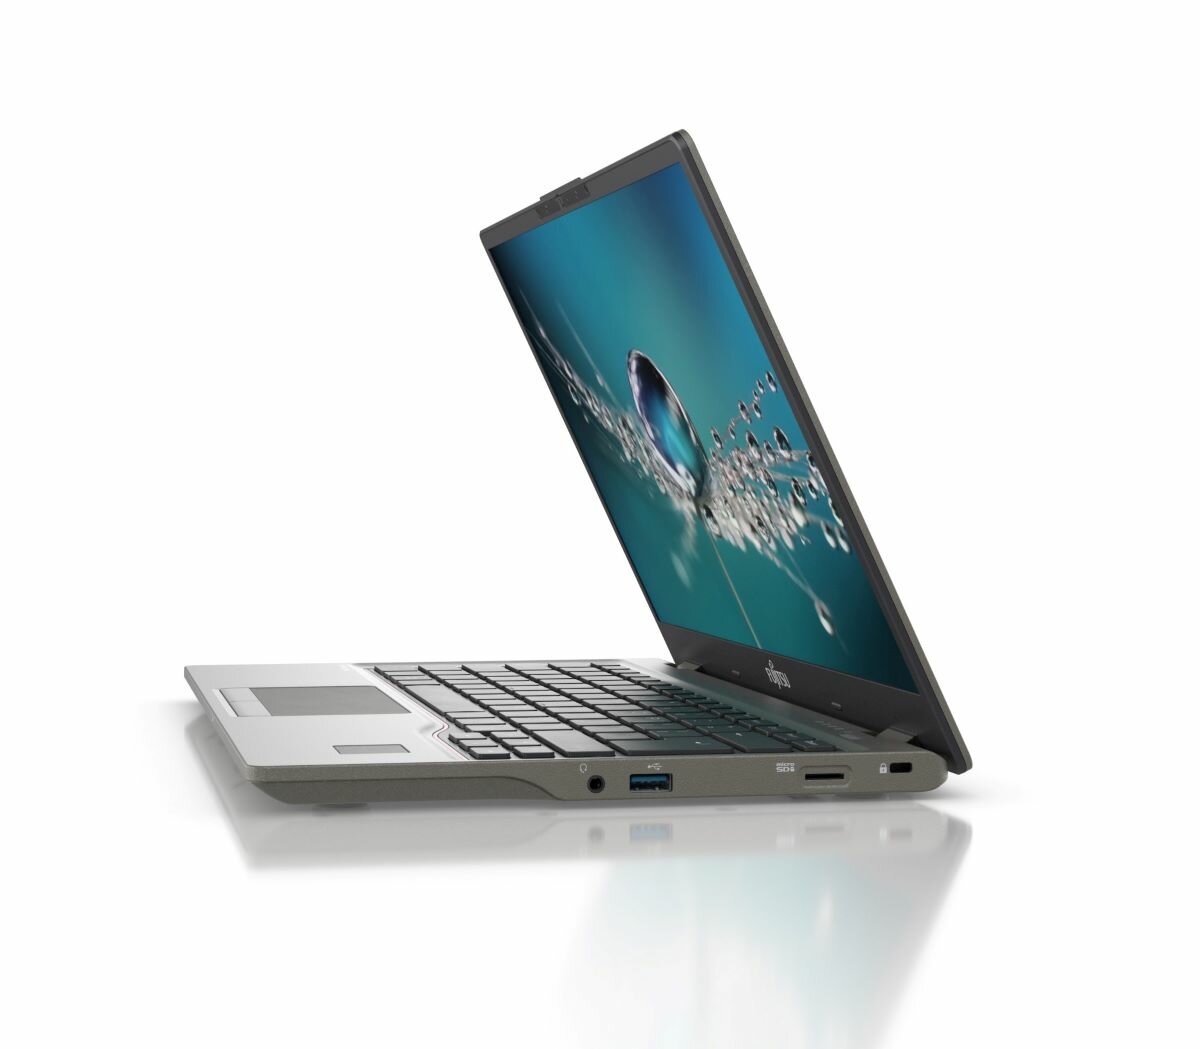 Notebook Fujitsu LIFEBOOK U7411 widok na lekko uchylonego laptopa bokiem